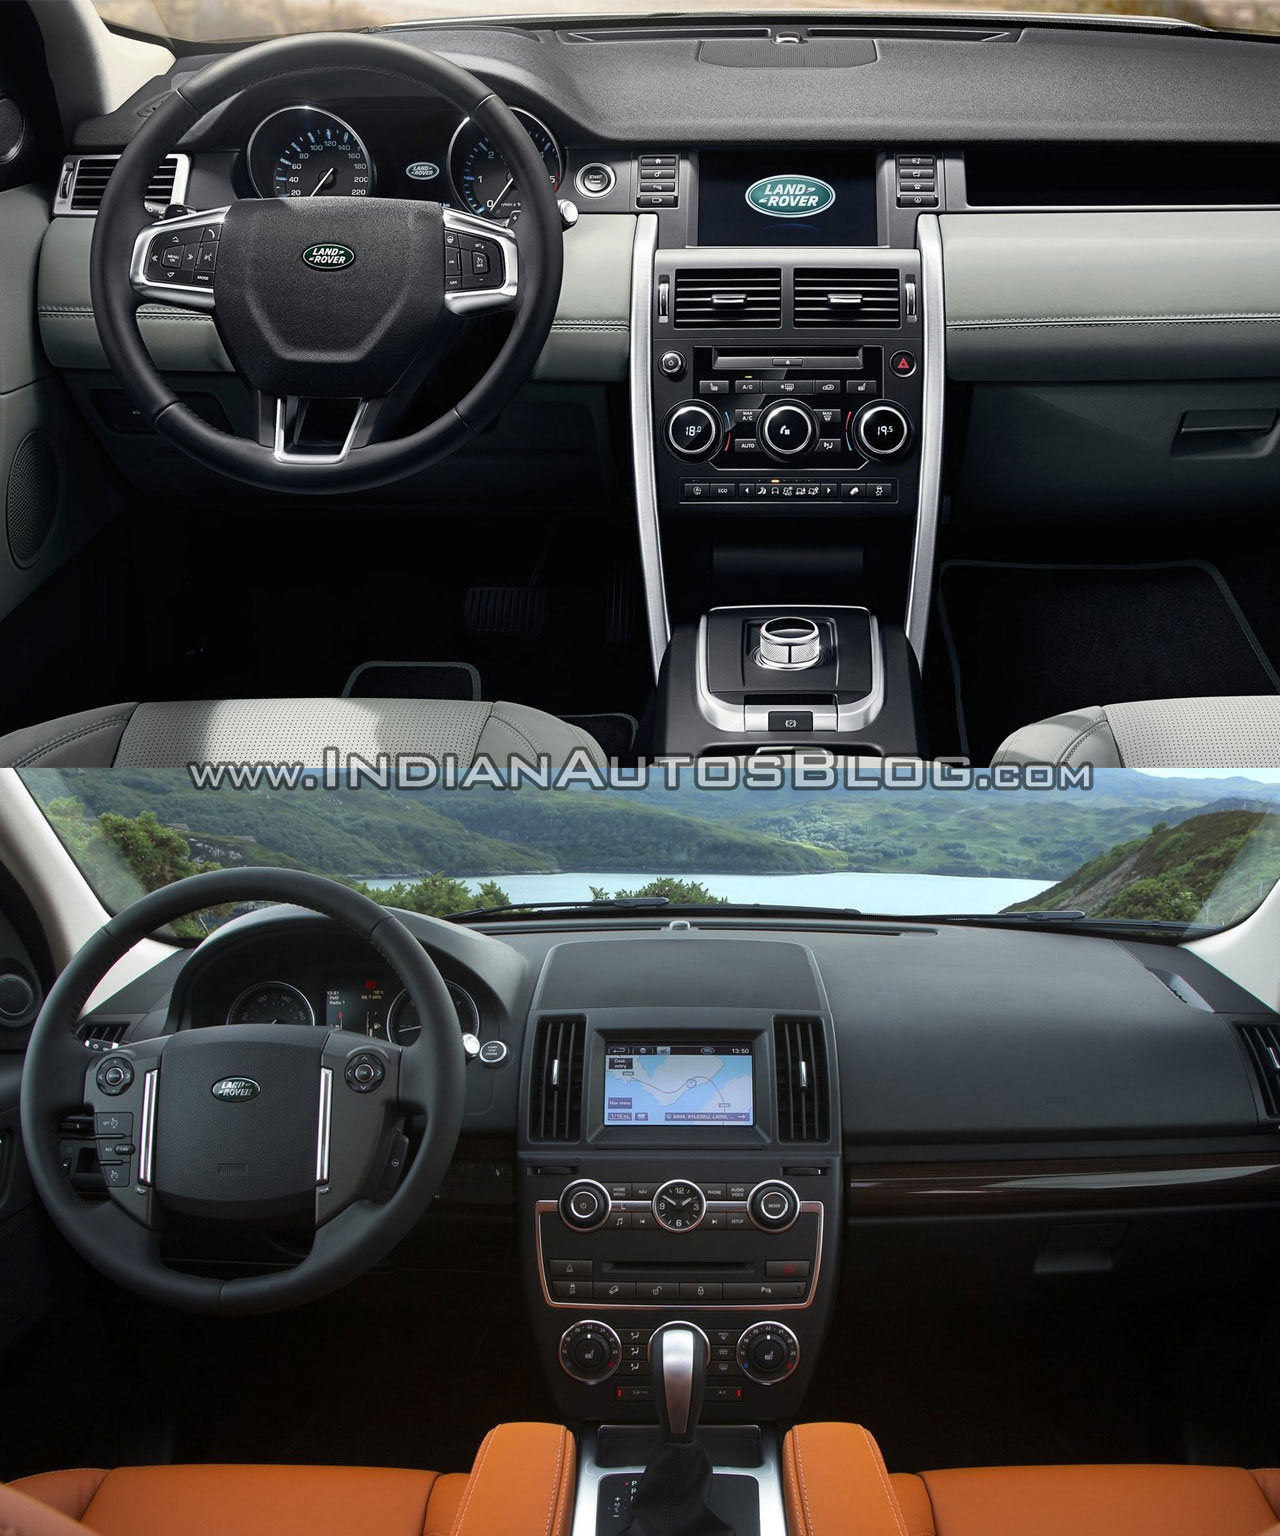 Land Rover Discovery Sport vs Freelander interior